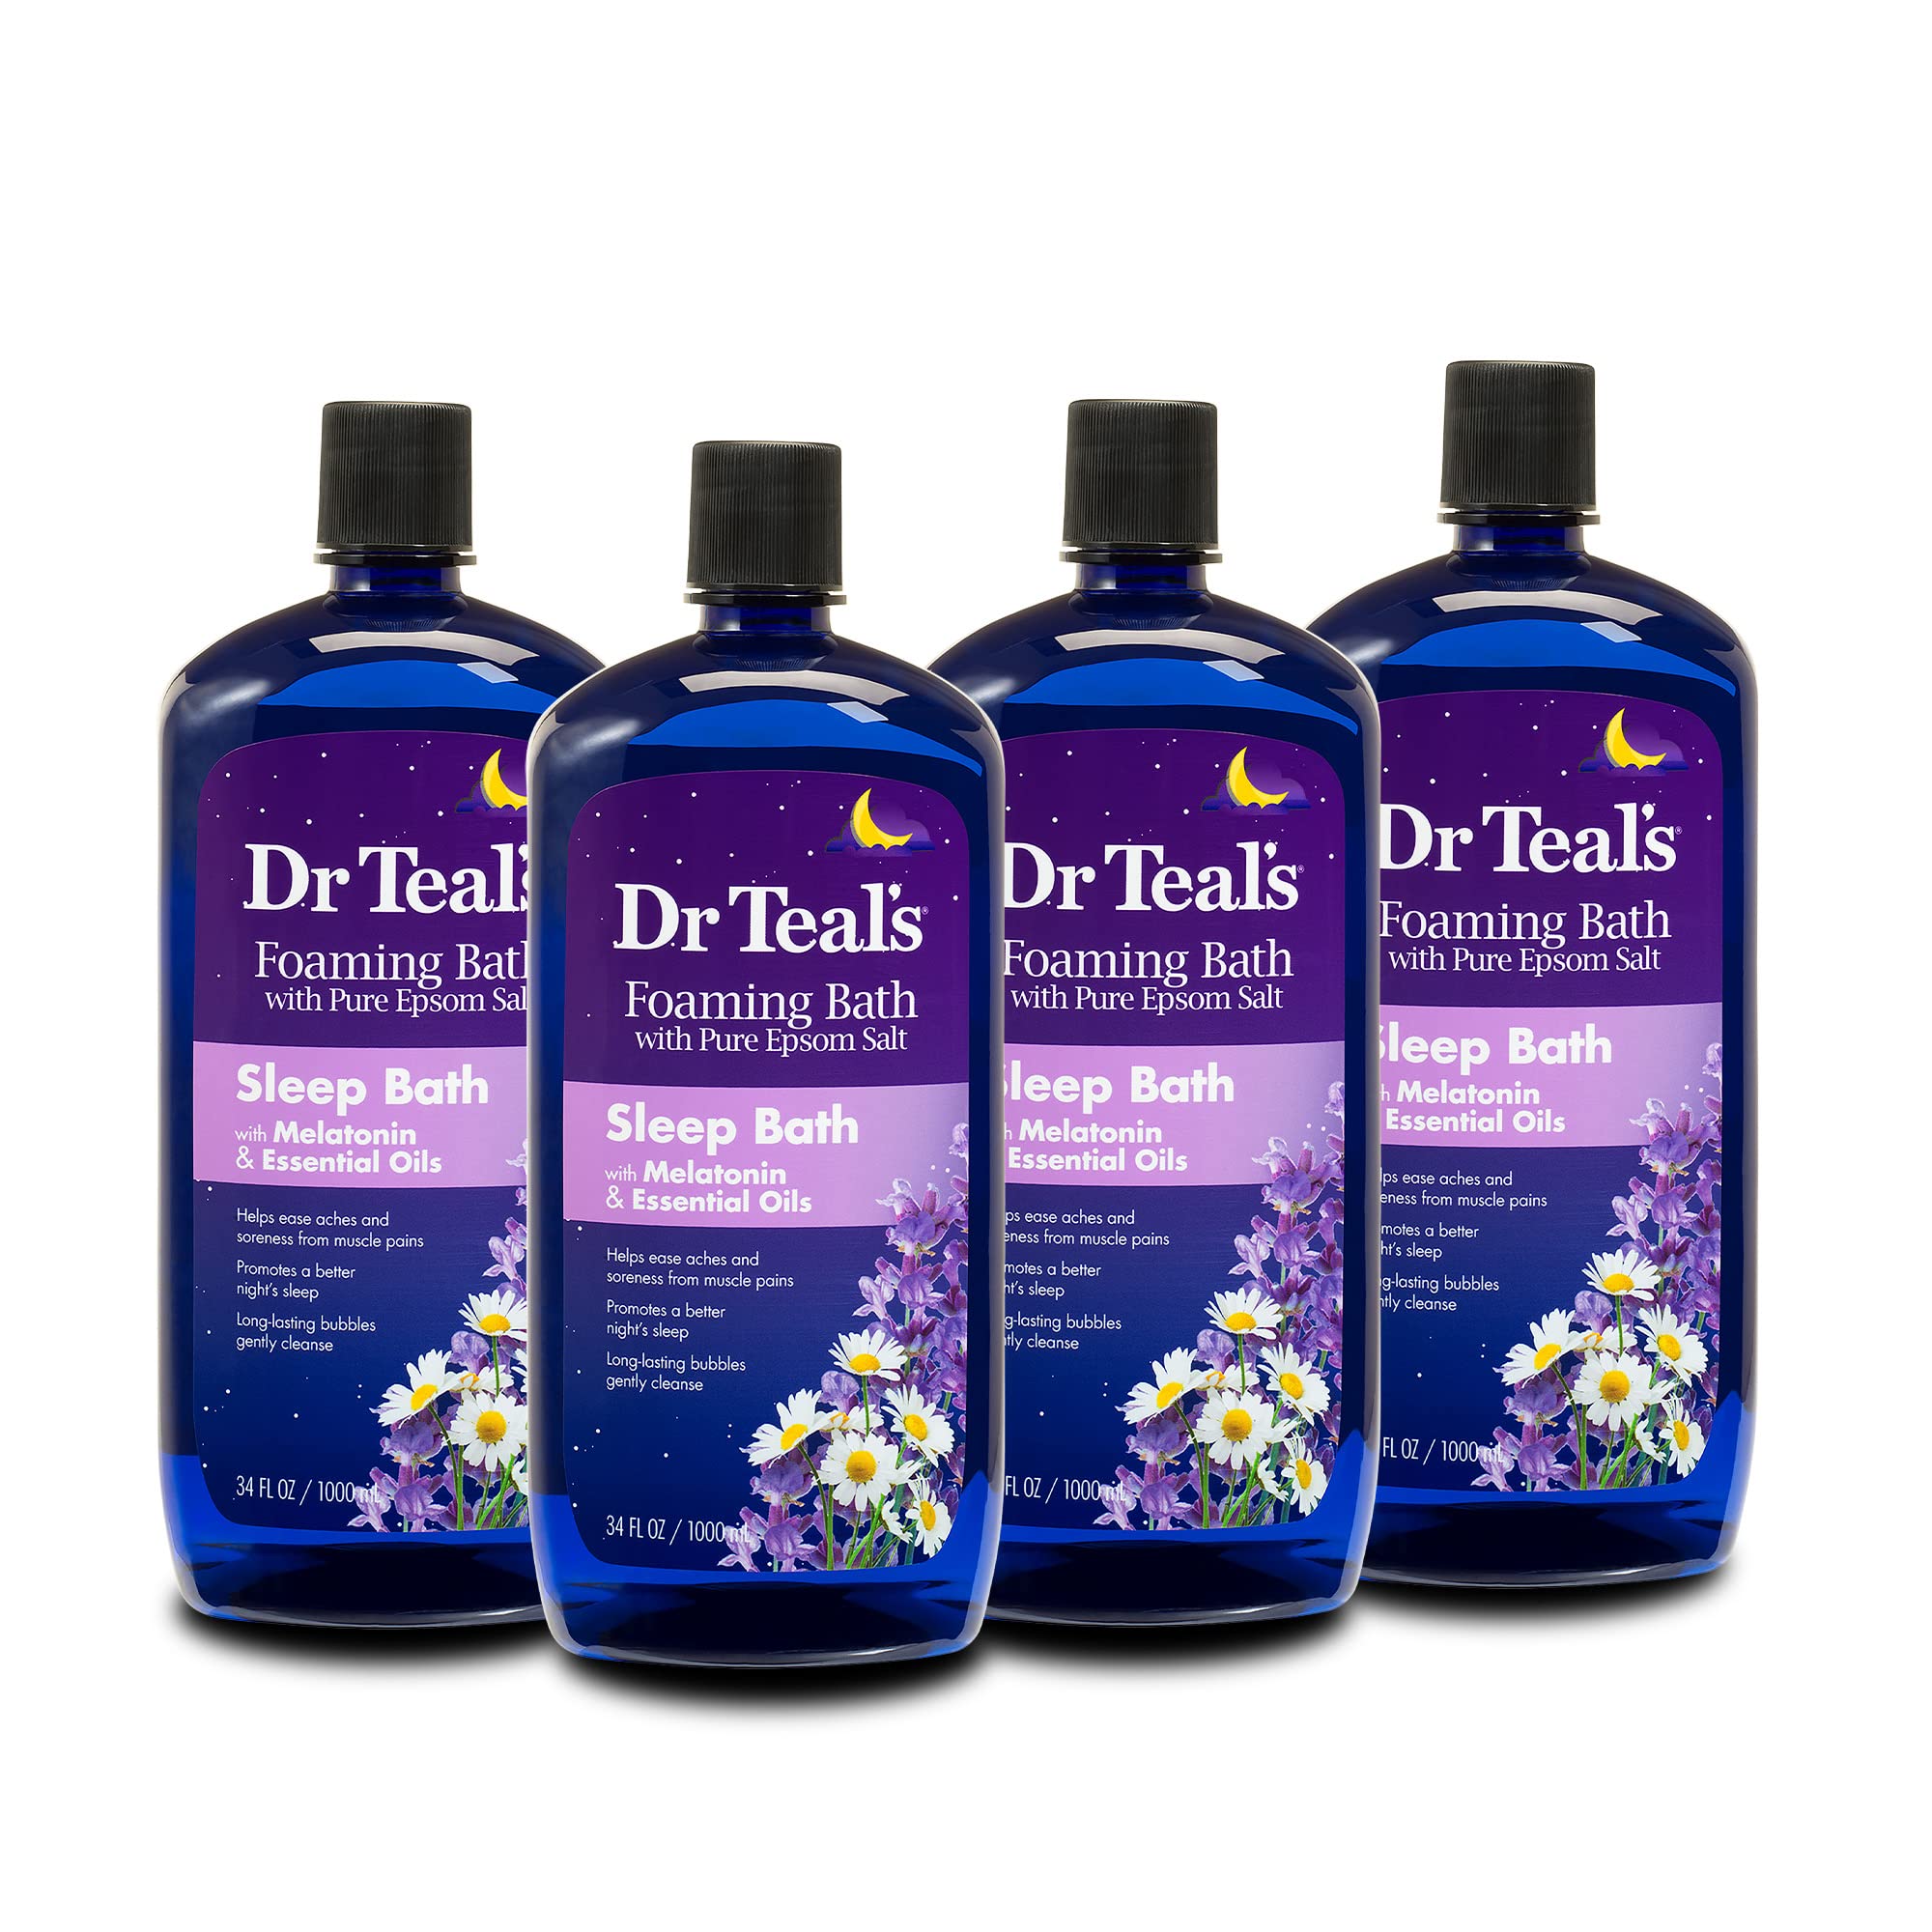 Dr Teal's Sleep Spray, Melatonin & Essential Oils, 6 fl oz (Pack of 3) & Foaming Bath with Pure Epsom Salt, Melatonin Sleep Soak with Essential Oil Blend, 34 fl oz (Pack of 4)